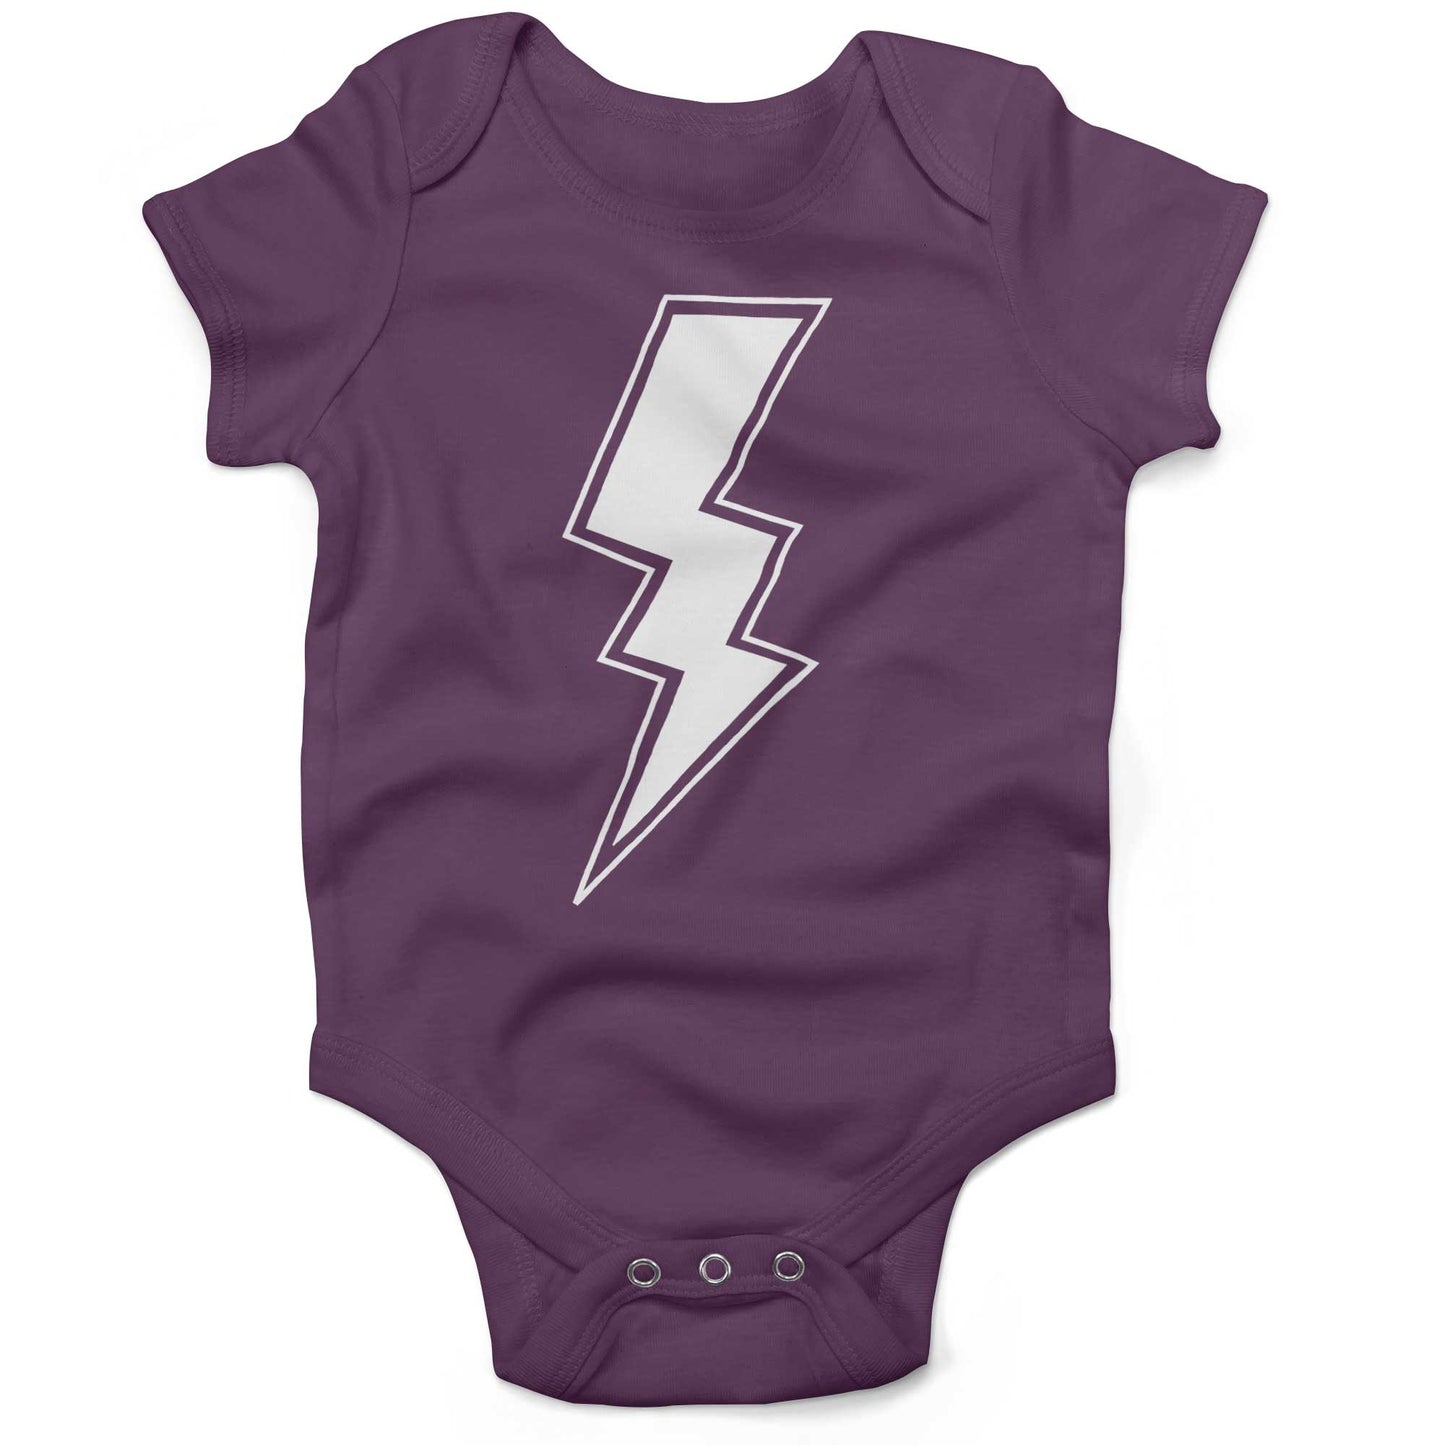 Giant Lightning Bolt Infant Bodysuit or Raglan Baby Tee-Organic Purple-3-6 months